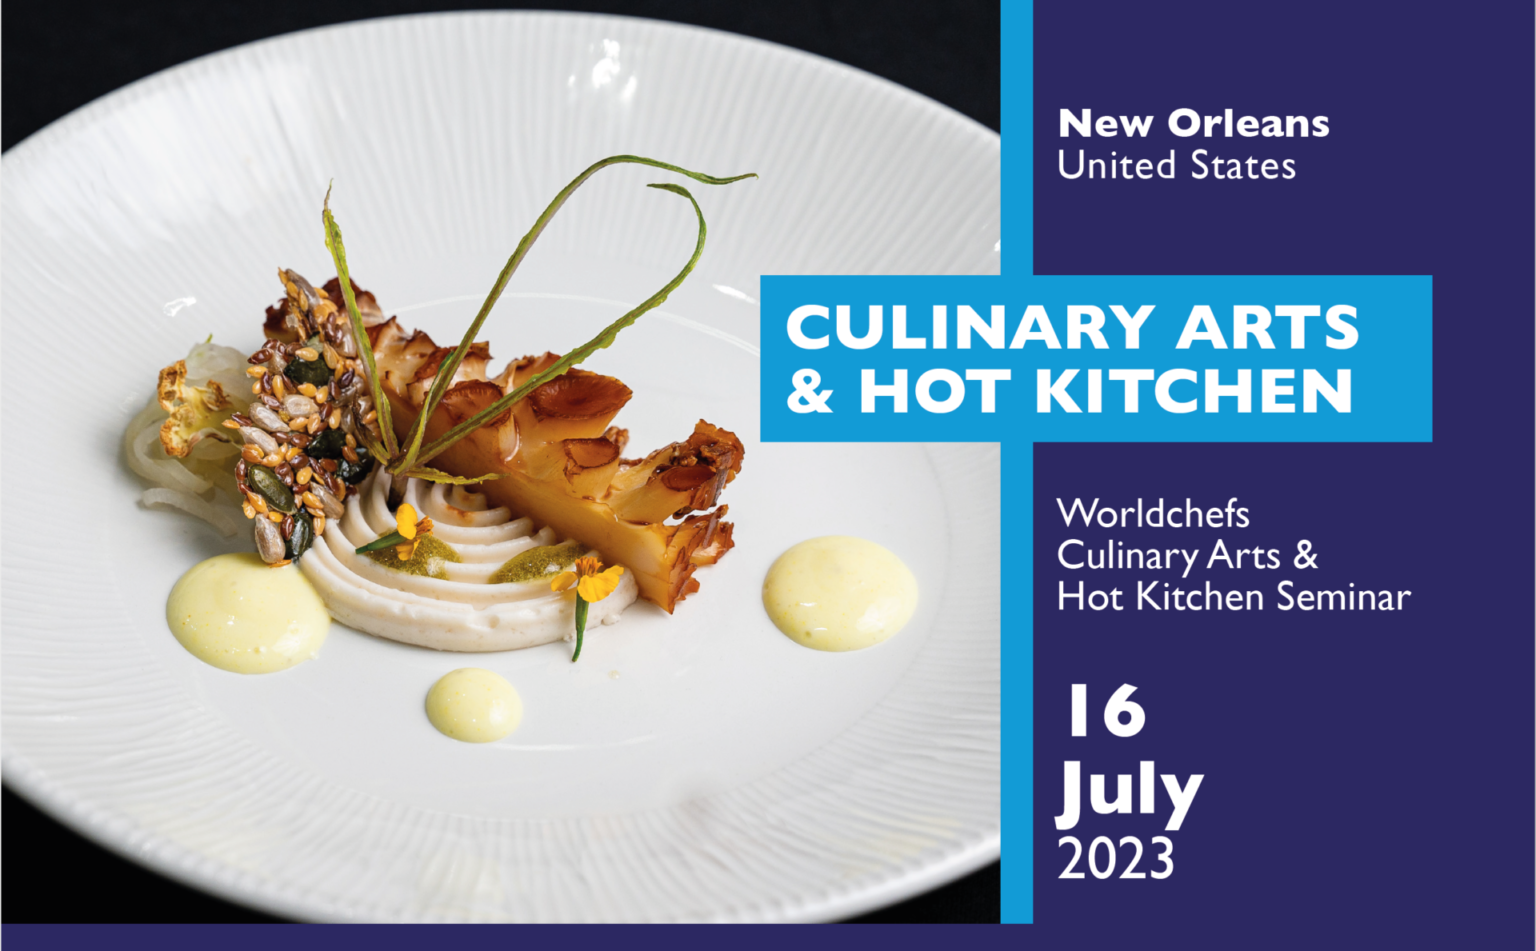 Hot Kitchen & Culinary Arts: United States